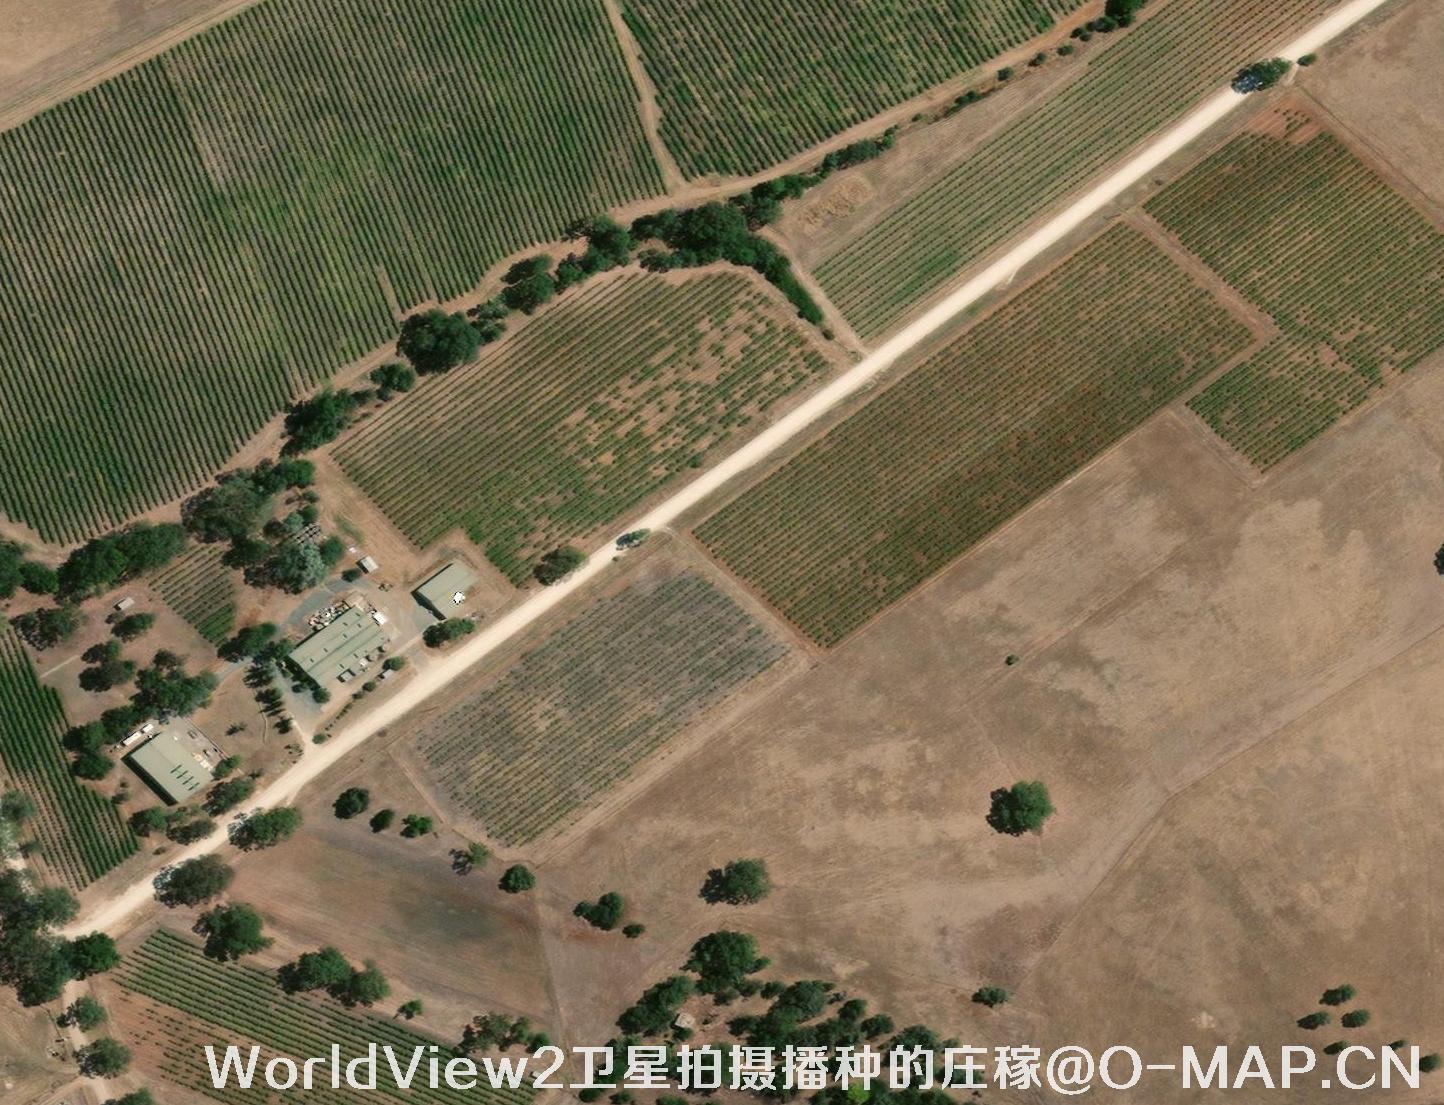 WorldView2卫星拍摄的已经播种的庄稼